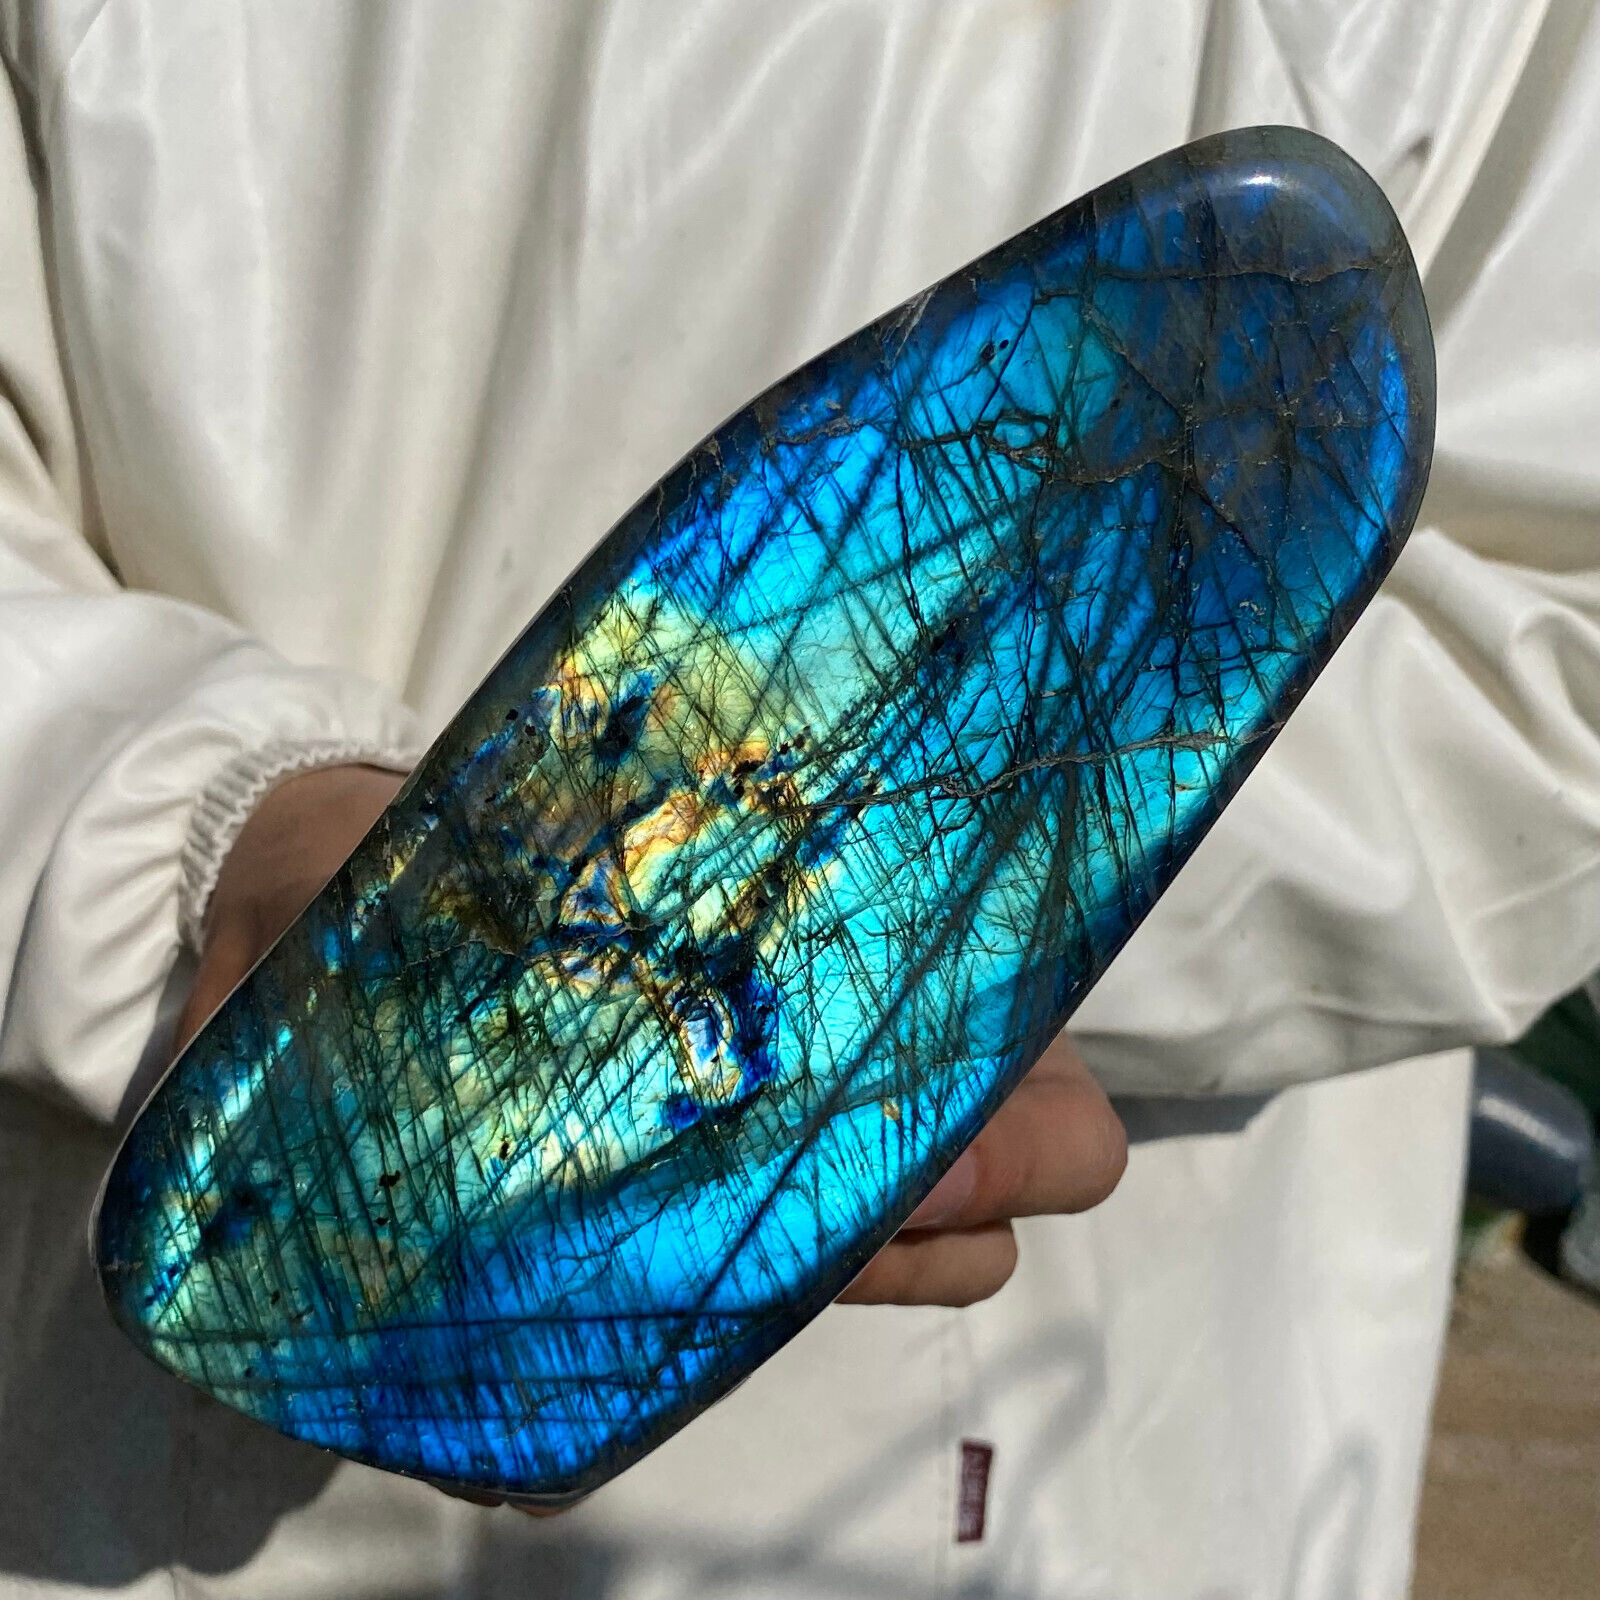 2.8lb Large Natural Labradorite Quartz Crystal Display Mineral Specimen Healing